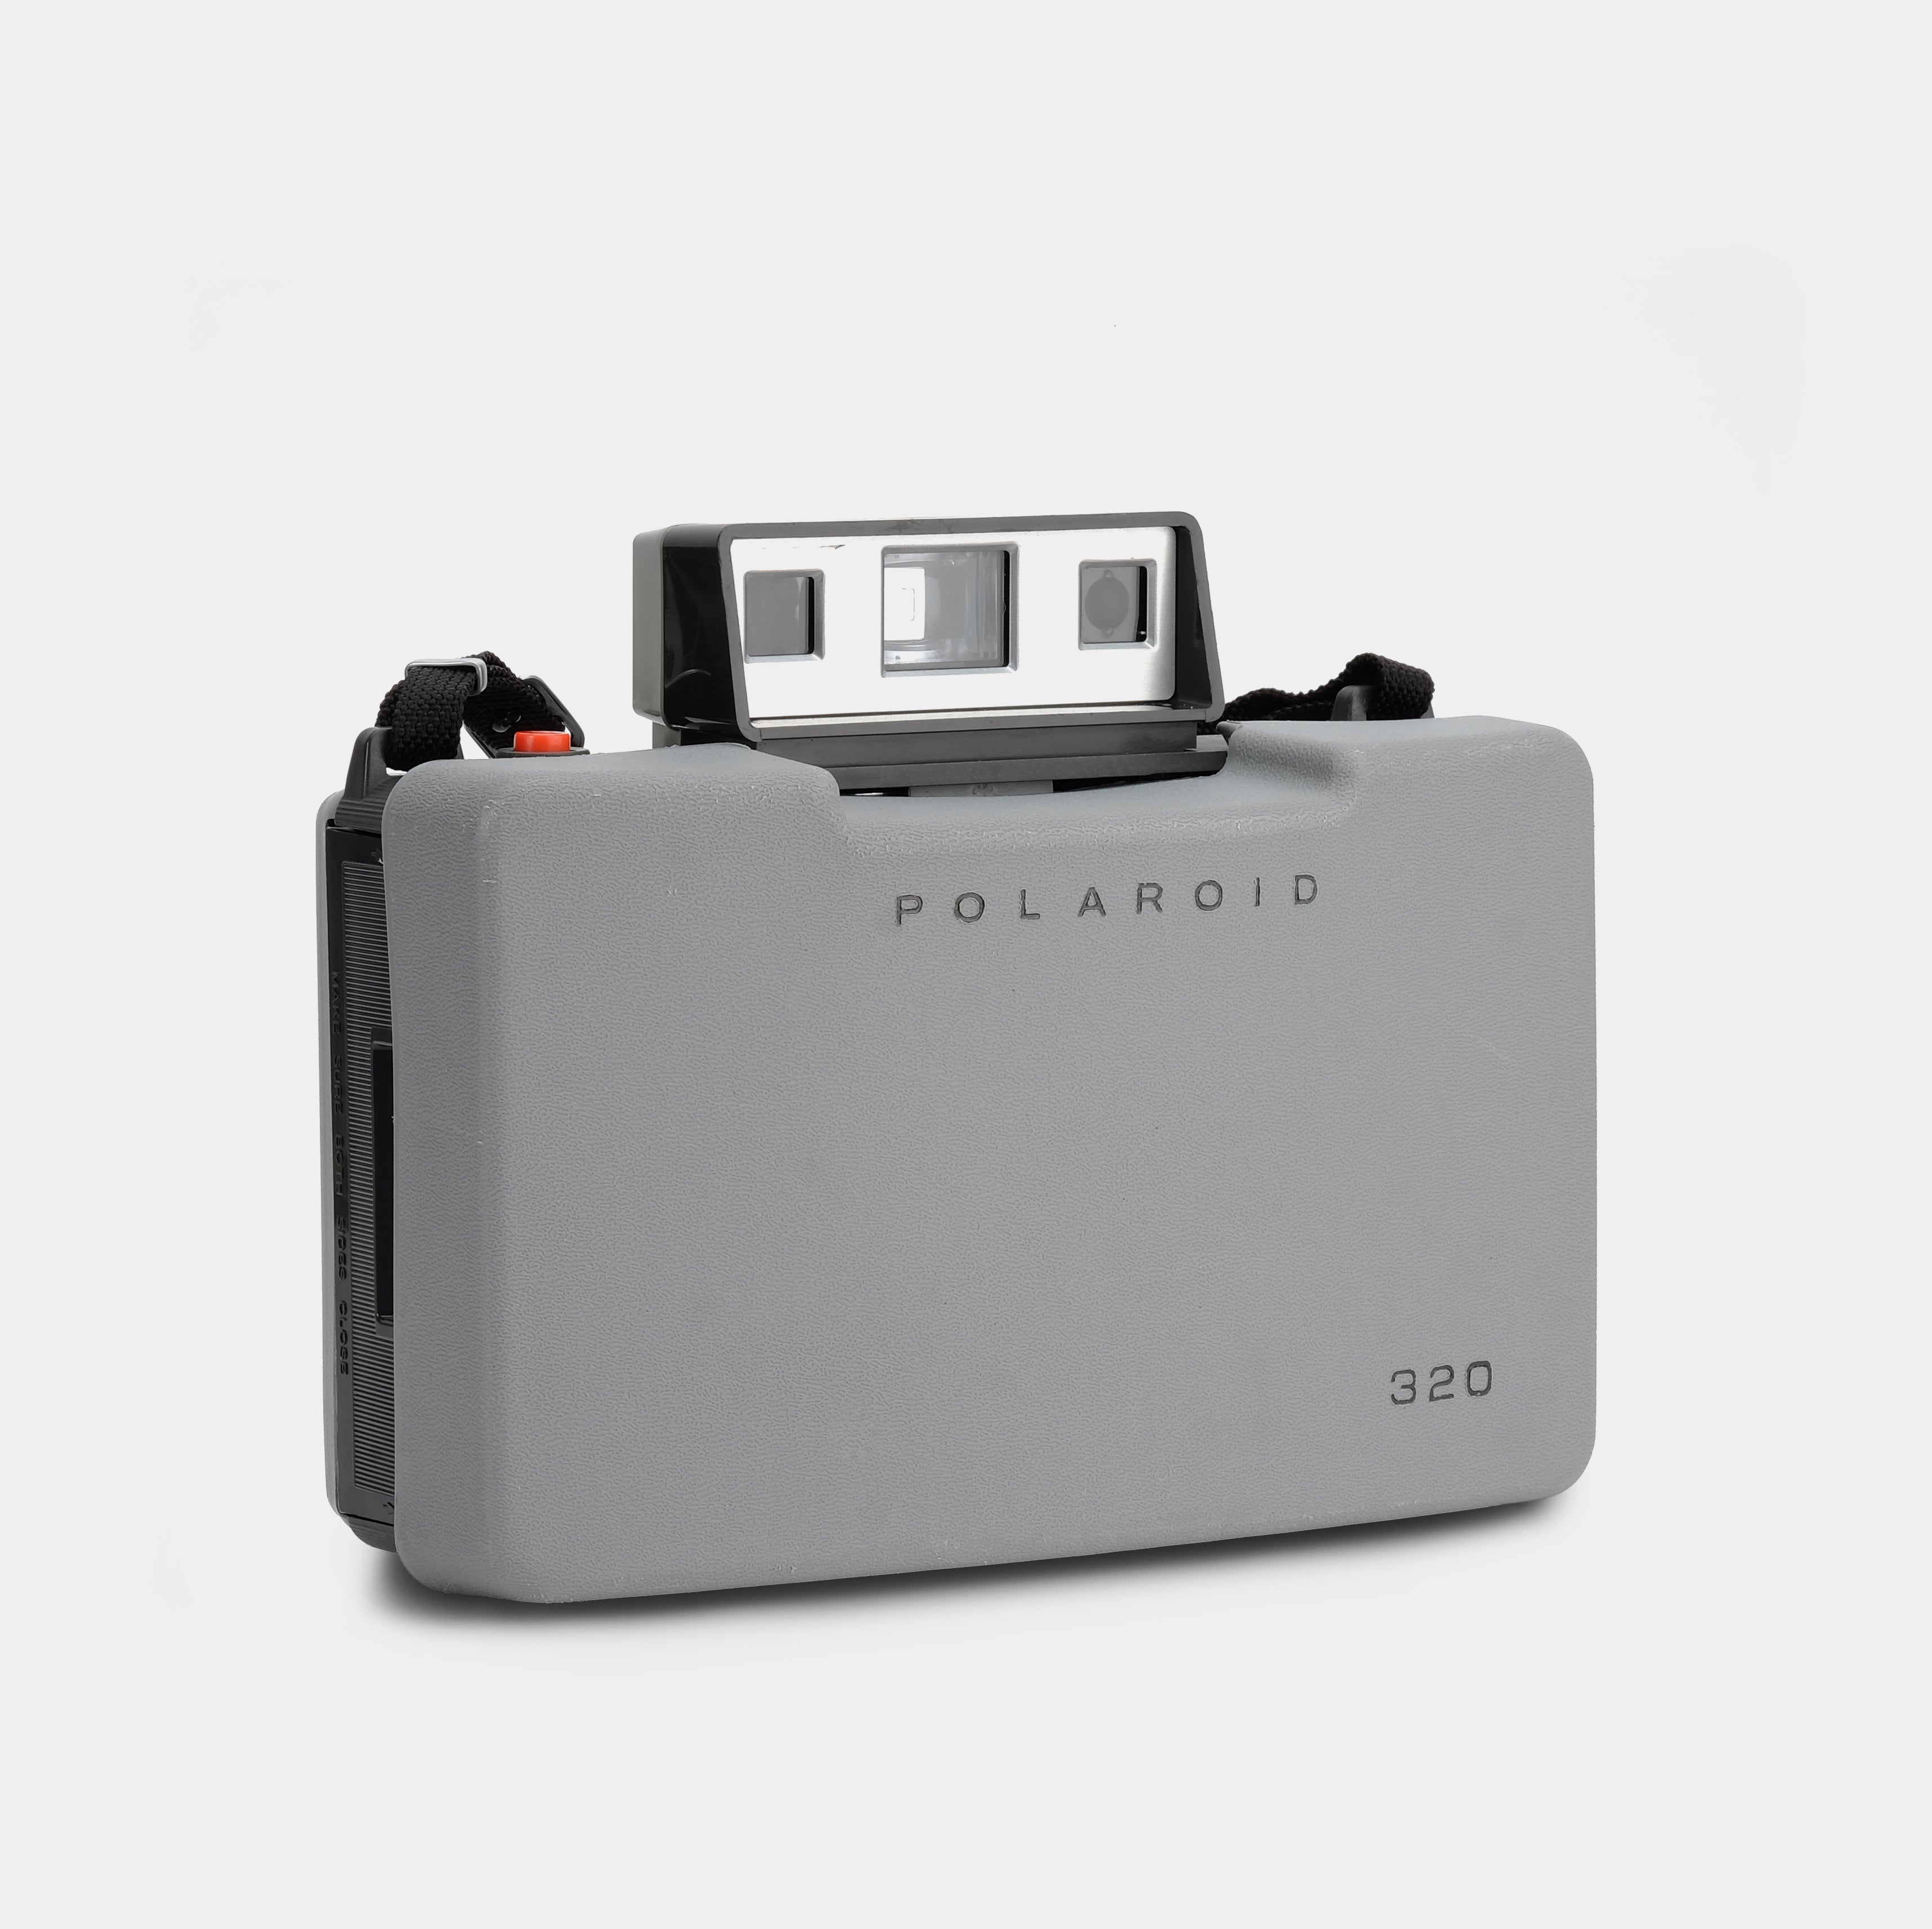 Polaroid Model 320 Packfilm Land Camera